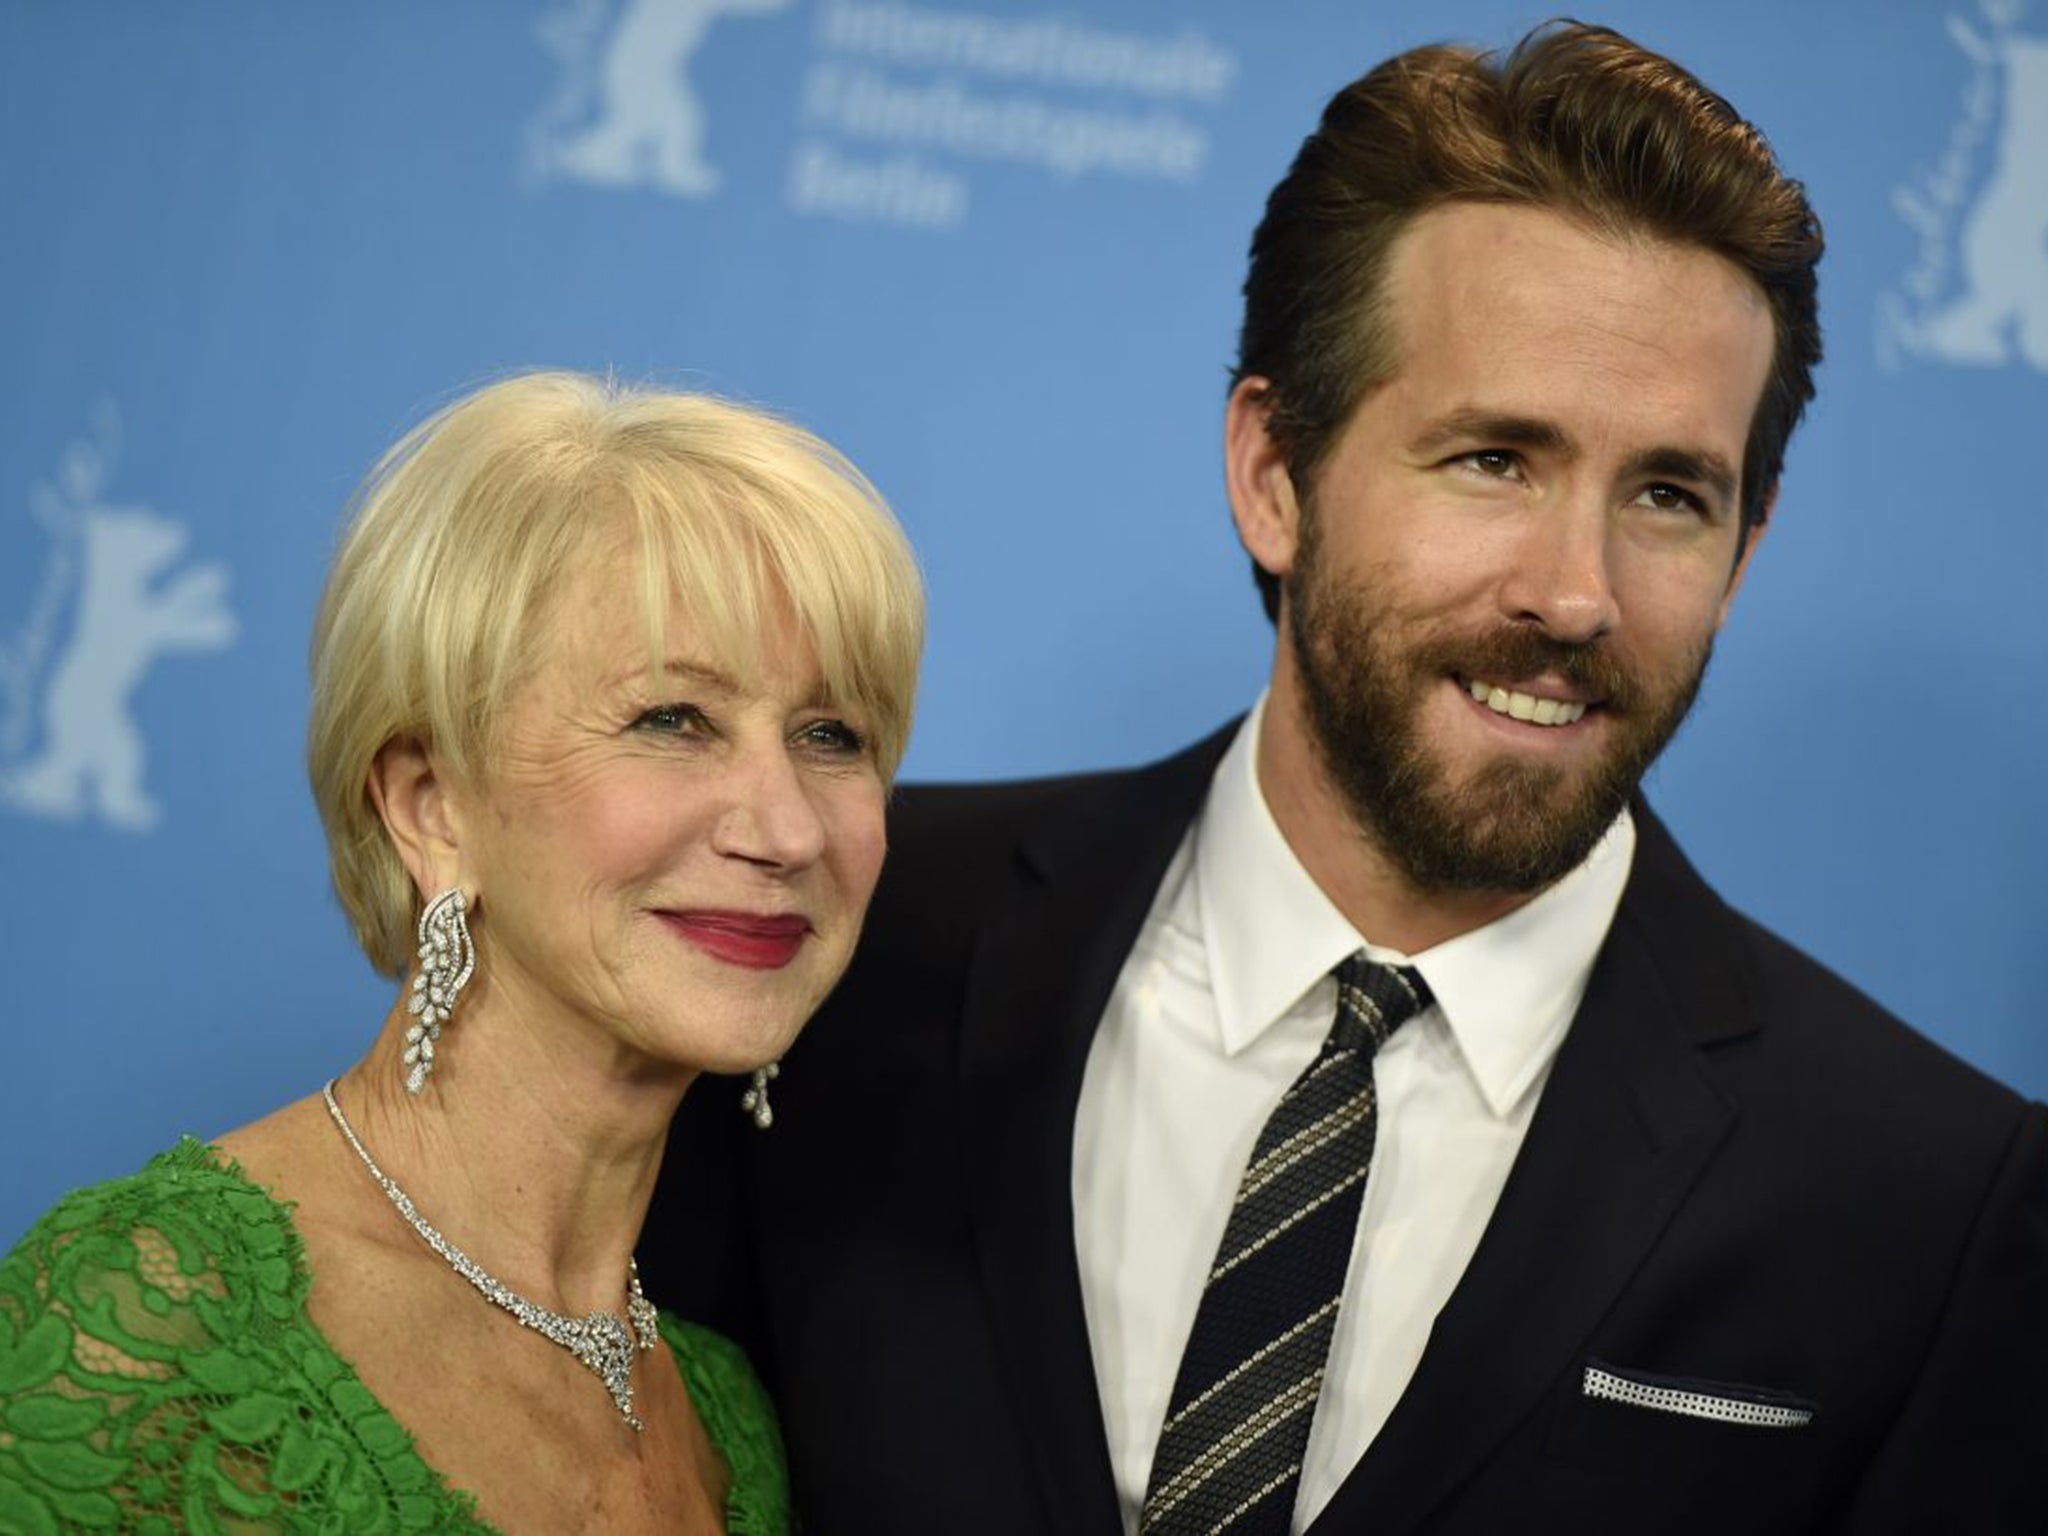 Ryan Reynolds and Helen Mirren together at this year’s Berlin International Film Festival